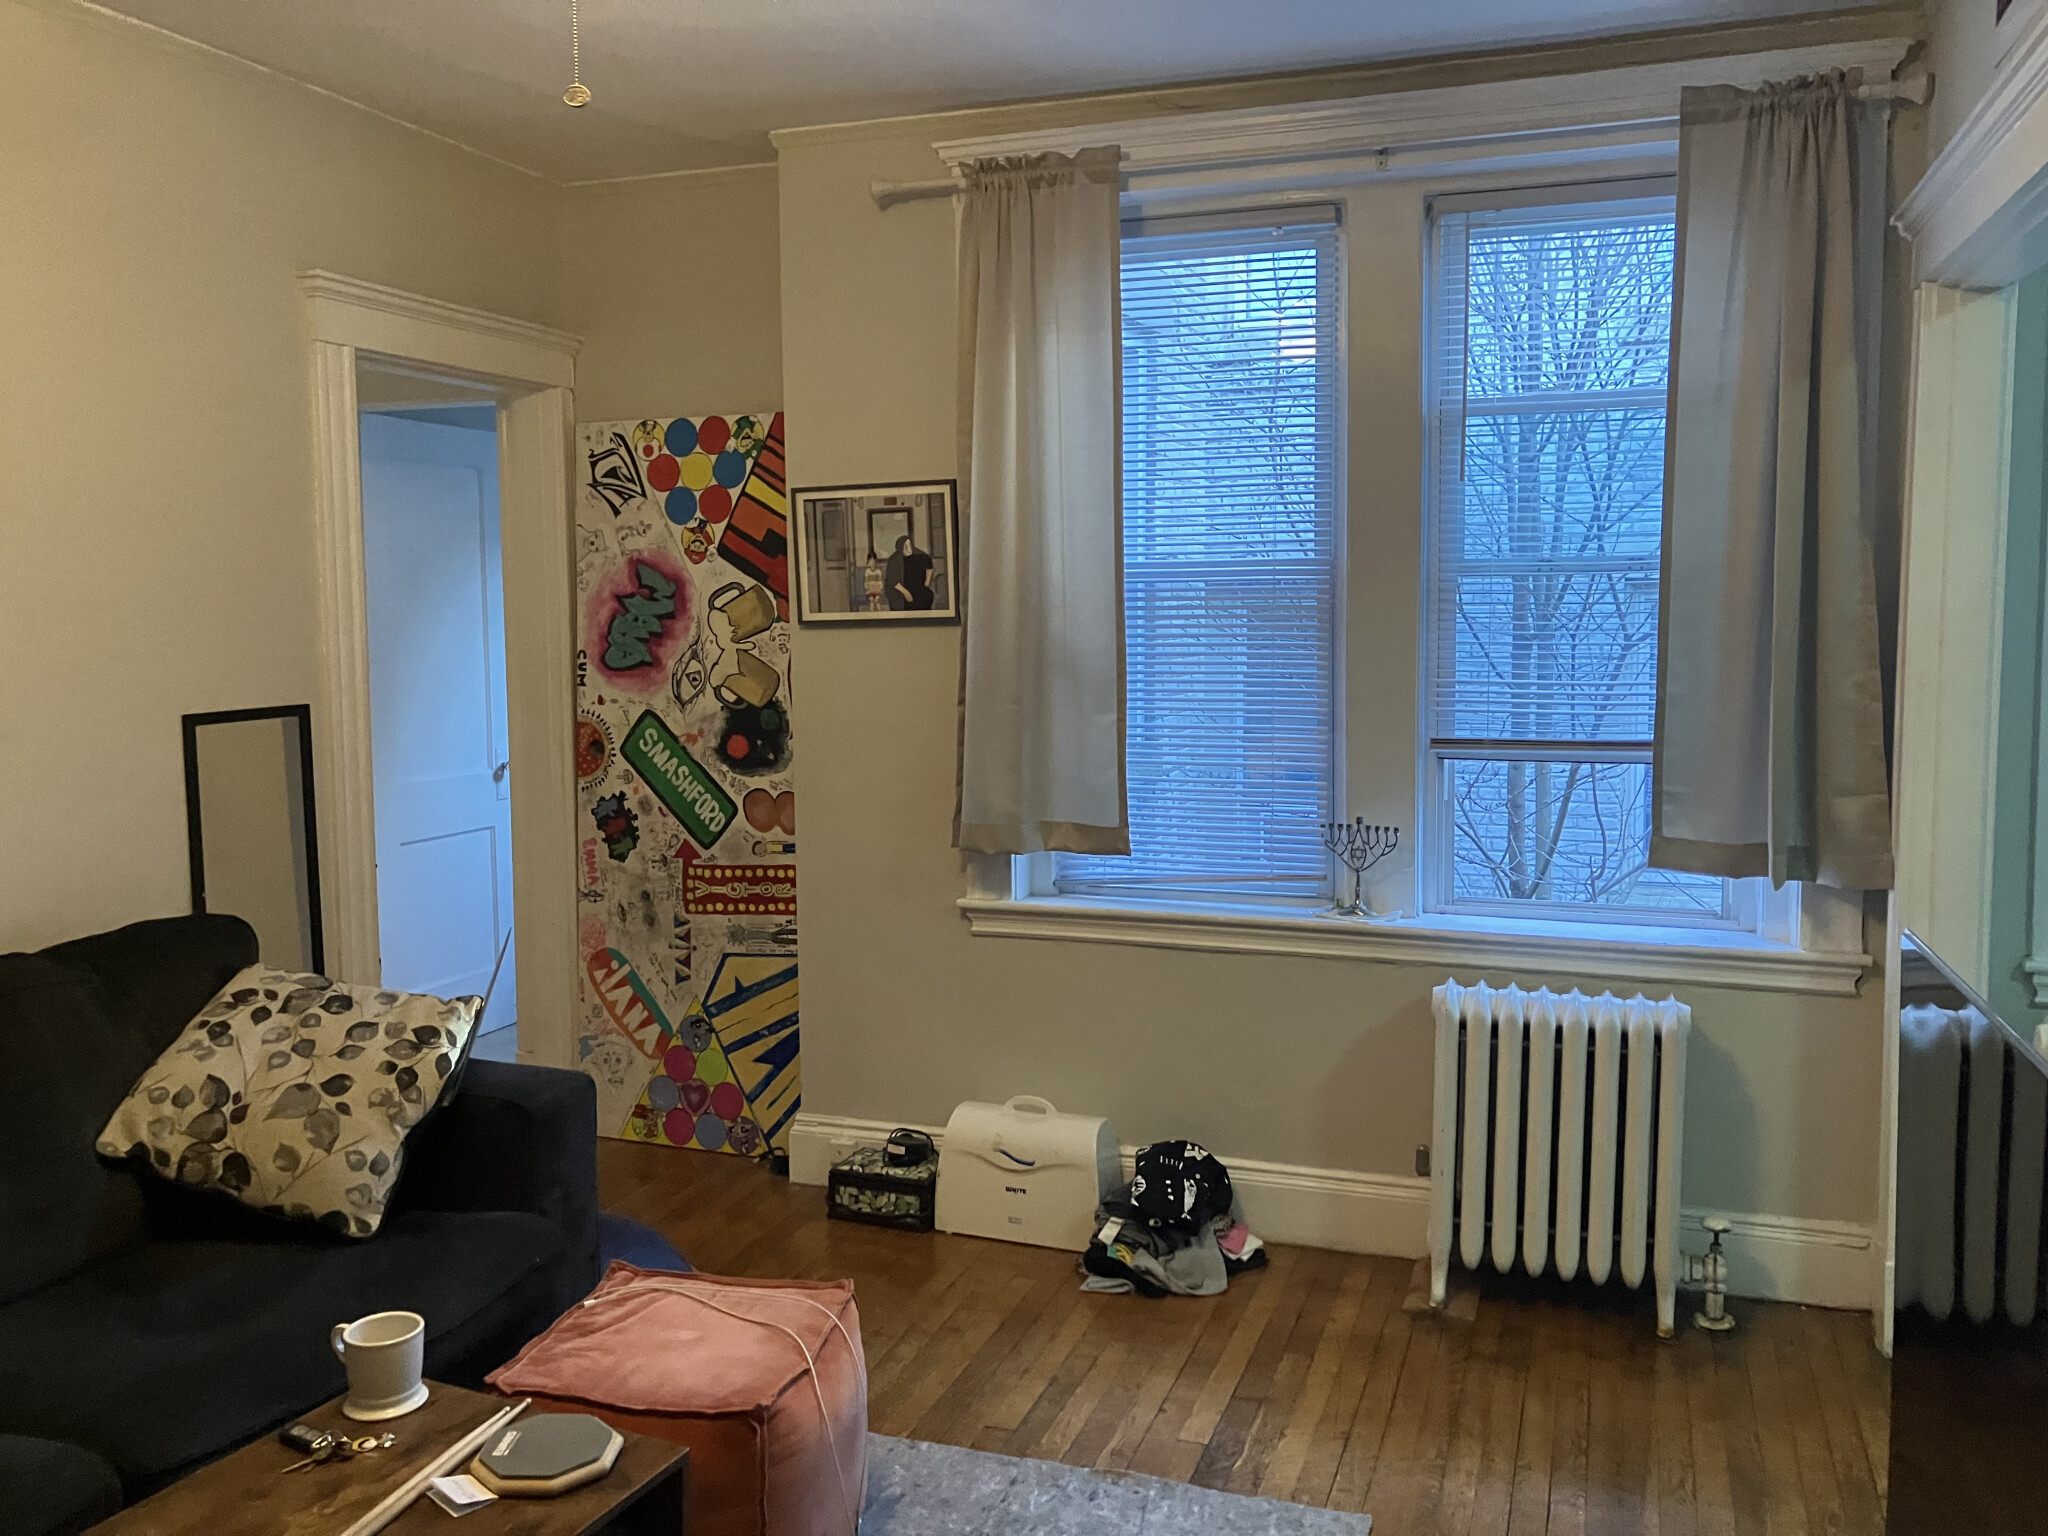 Photos of apartment on Brainerd Rd.,Boston MA 02134